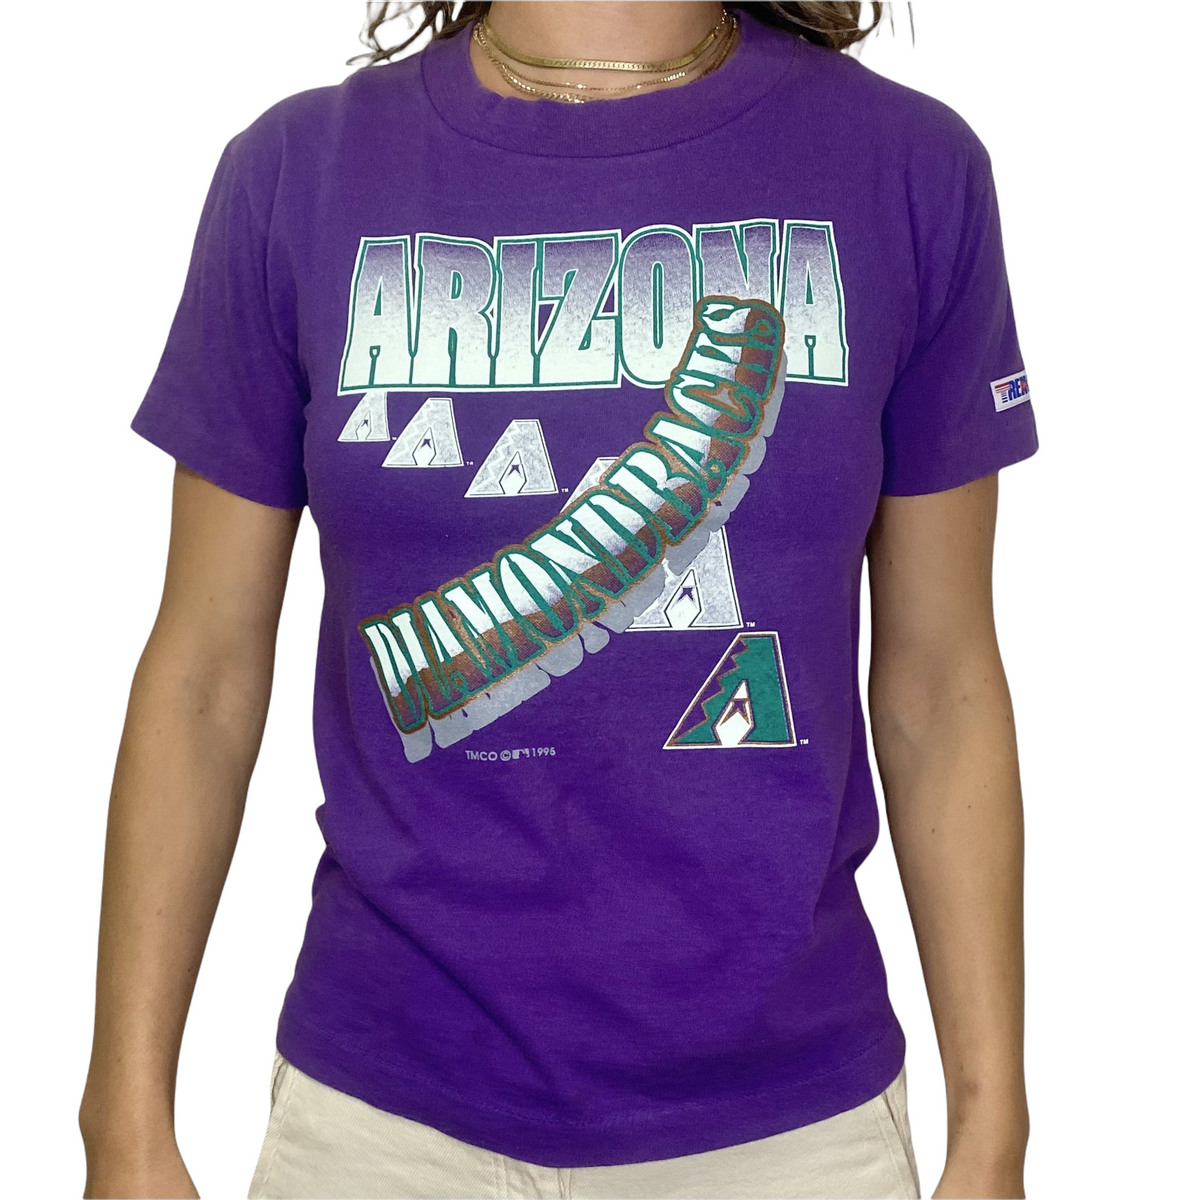 Vintage Arizona Diamondbacks Kids Youth Shirt Medium I6